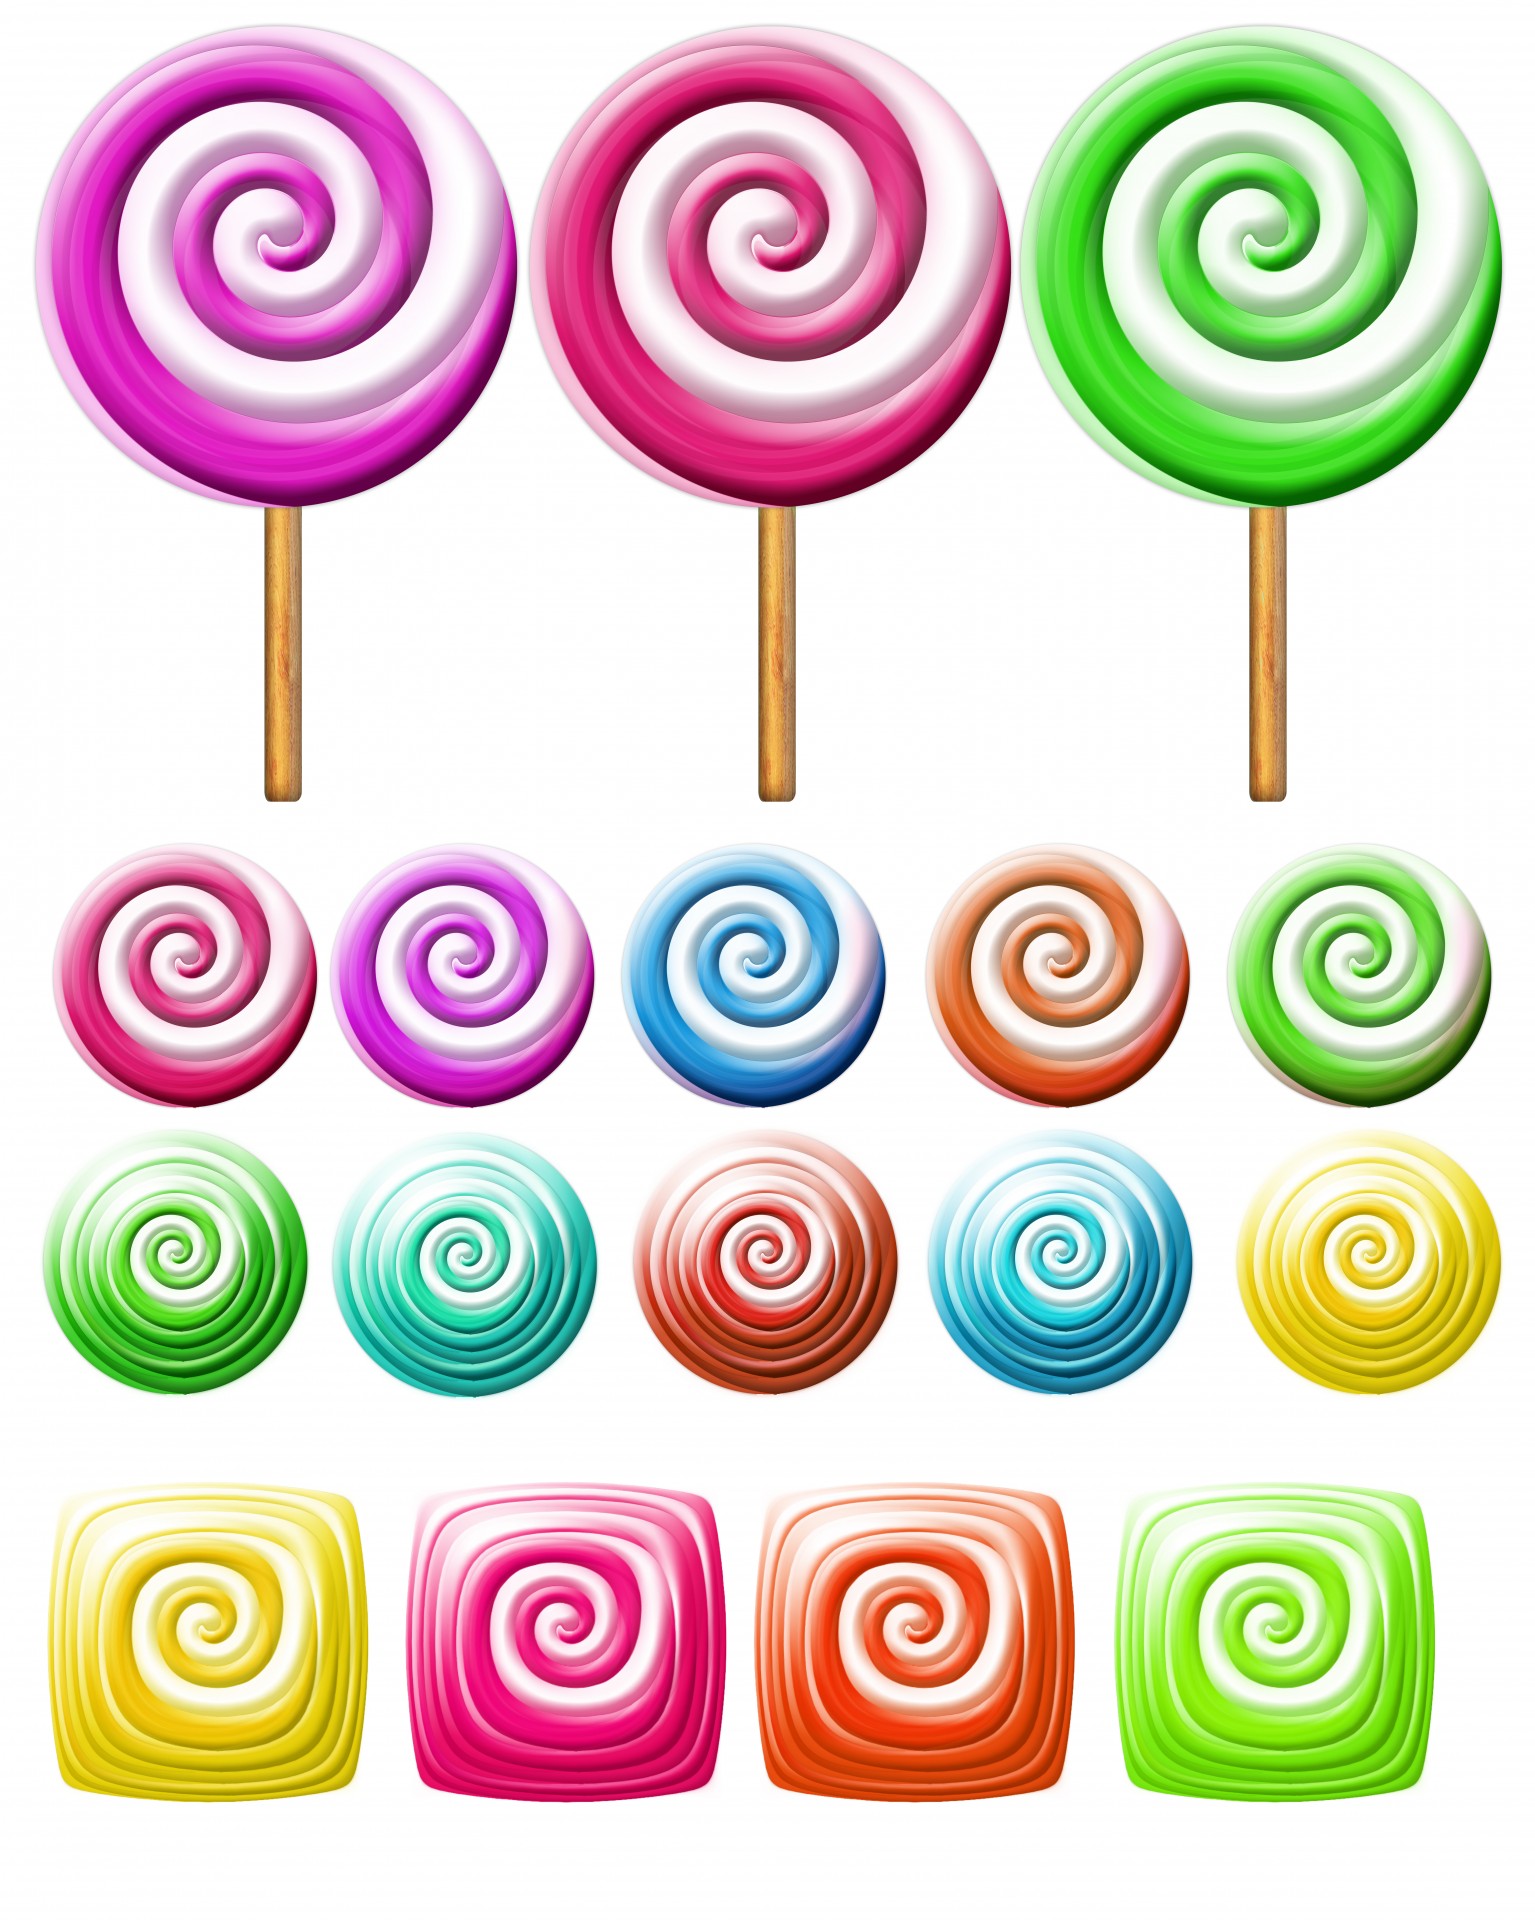 Bright lollipops icons.